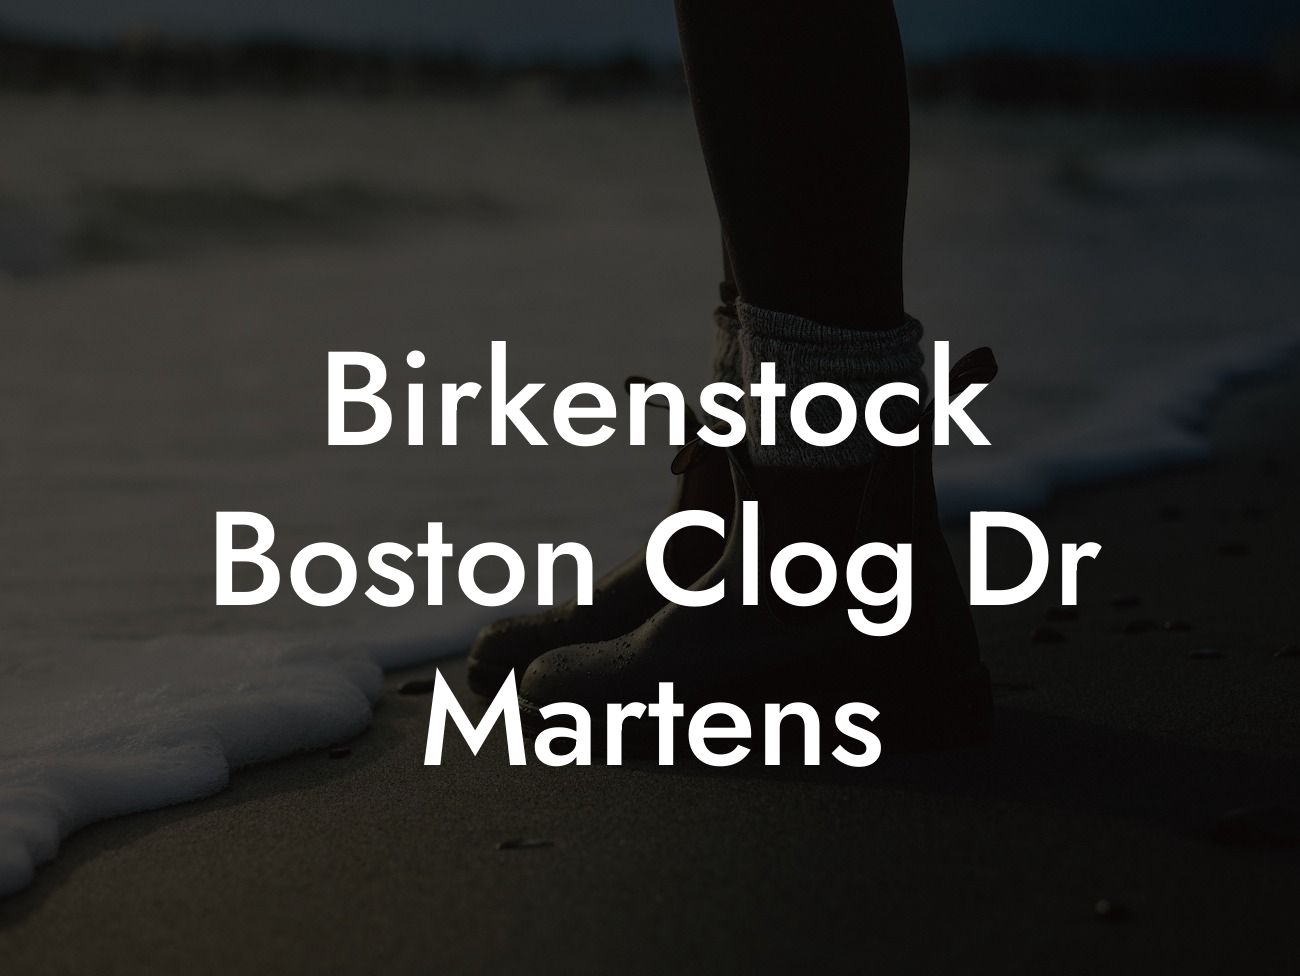 Birkenstock Boston Clog Dr Martens